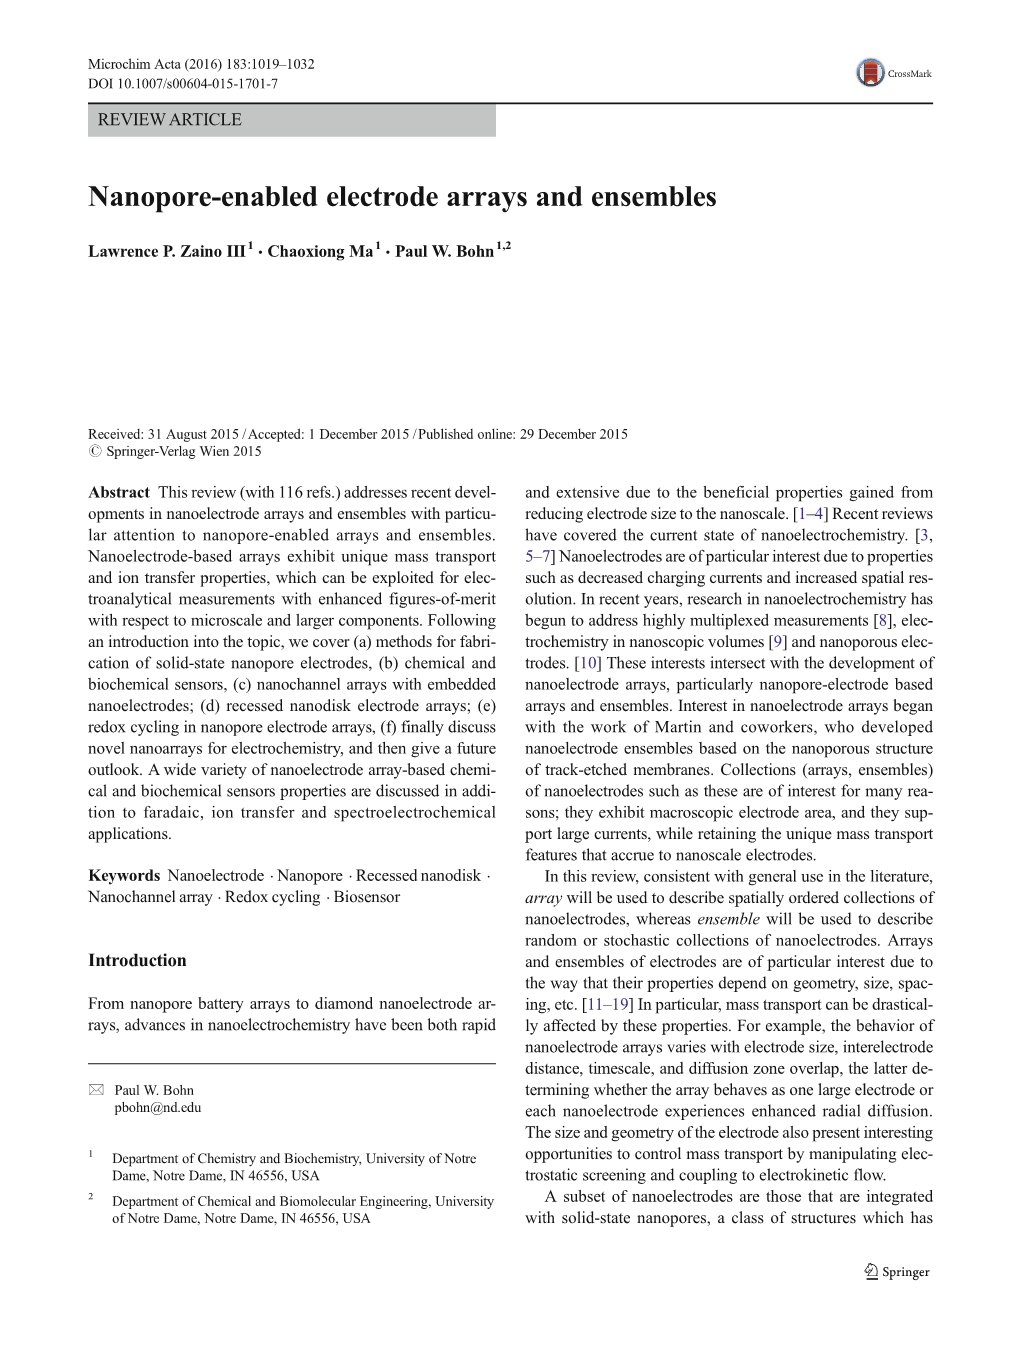 Nanopore-Enabled Electrode Arrays and Ensembles